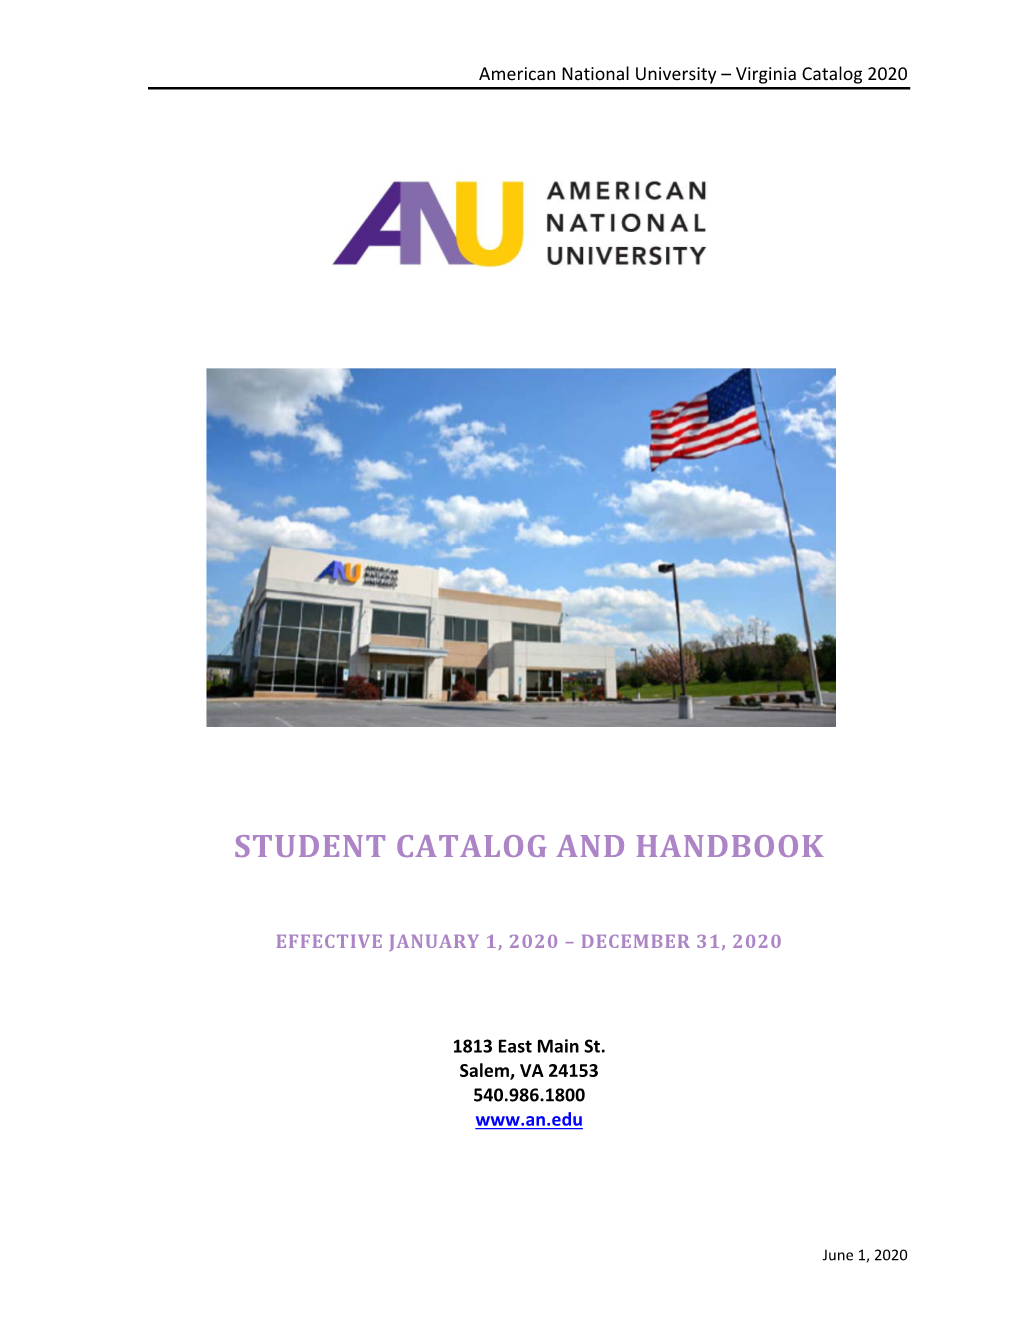 Student Catalog and Handbook